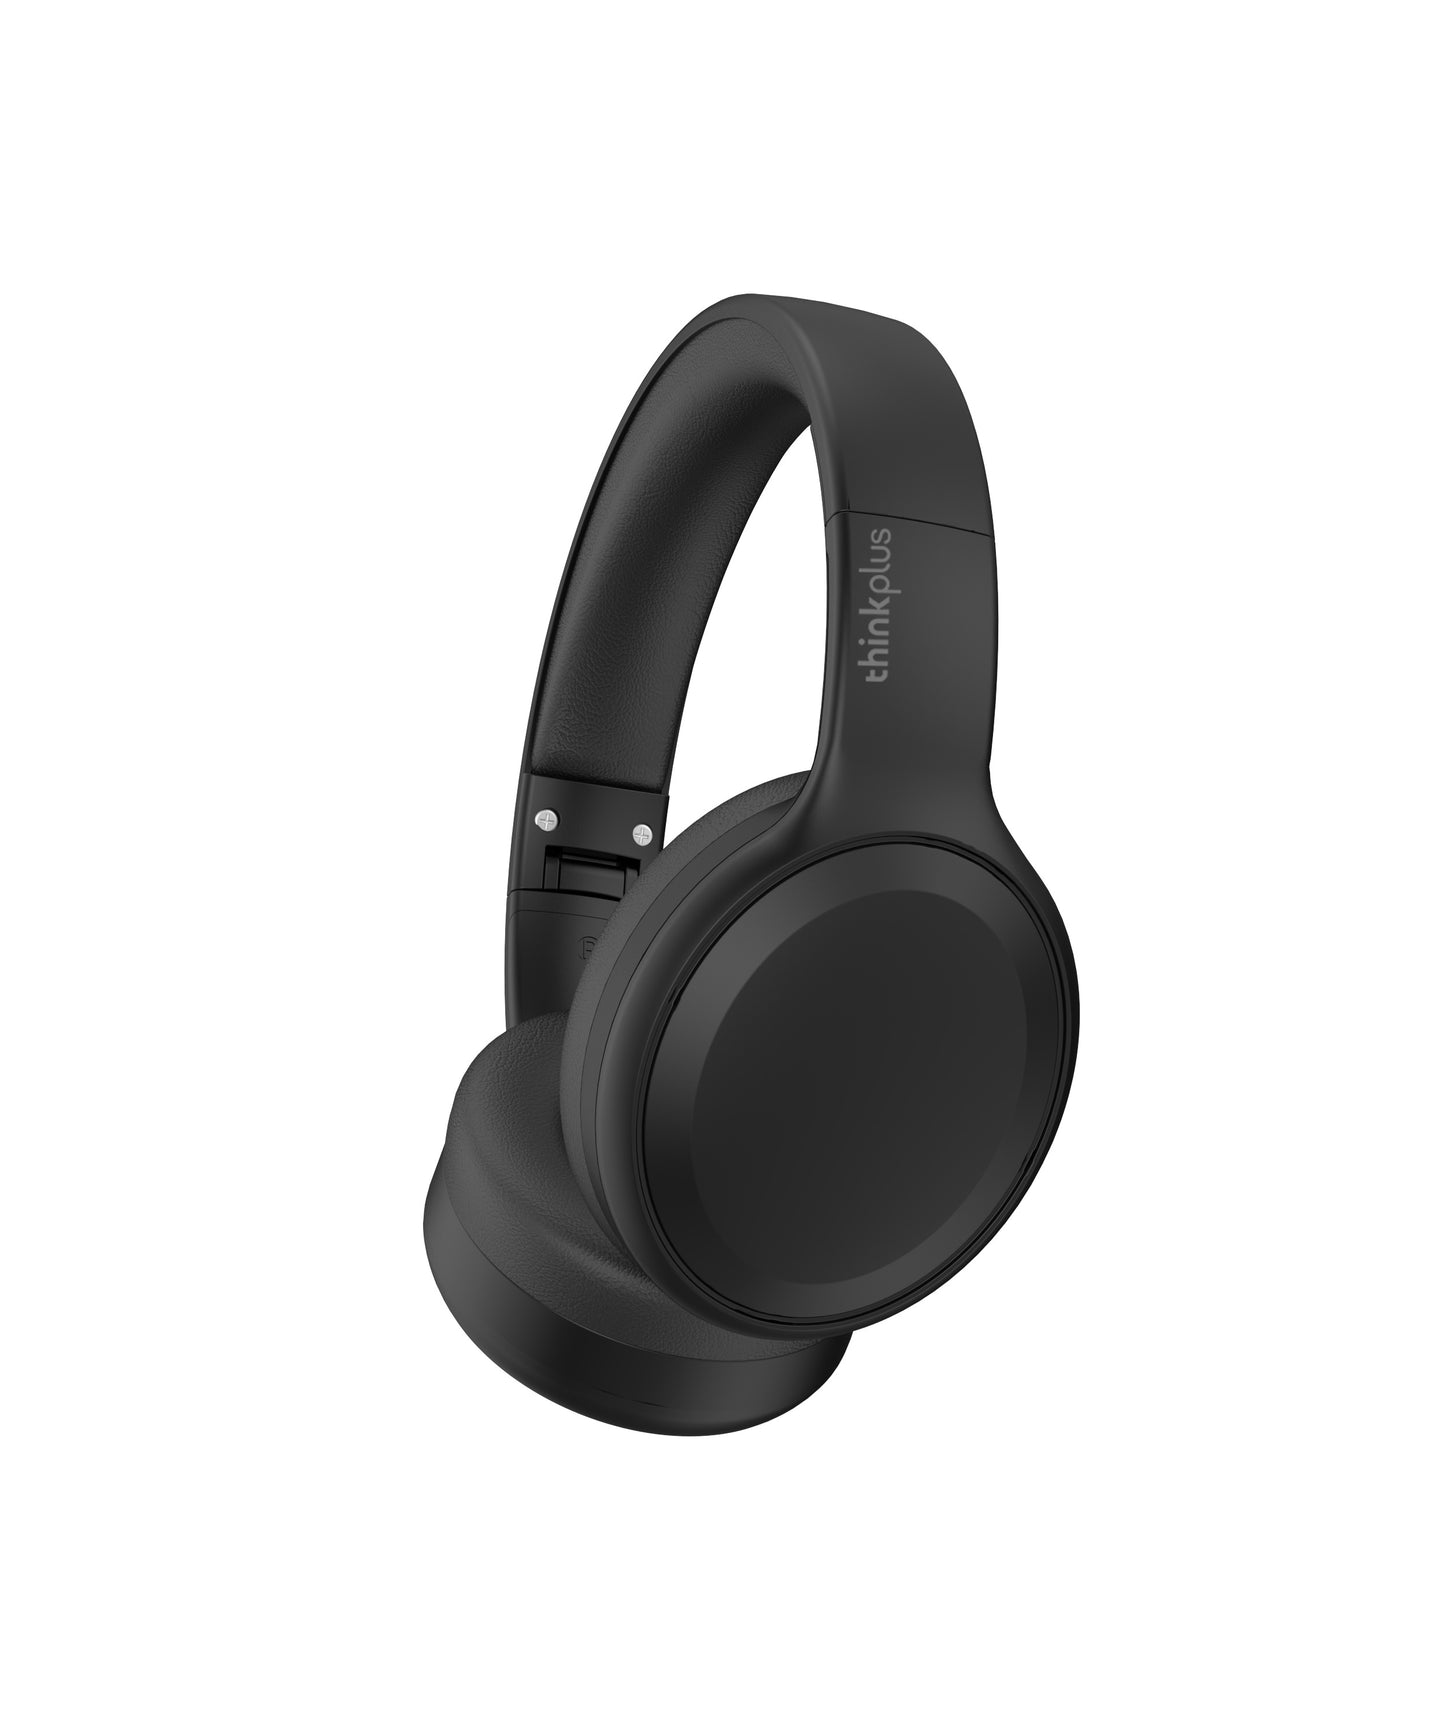 Wireless headphones Bluetooth earphone 5.0 foldable headset sport headphone game phone Bluetooth earbuds